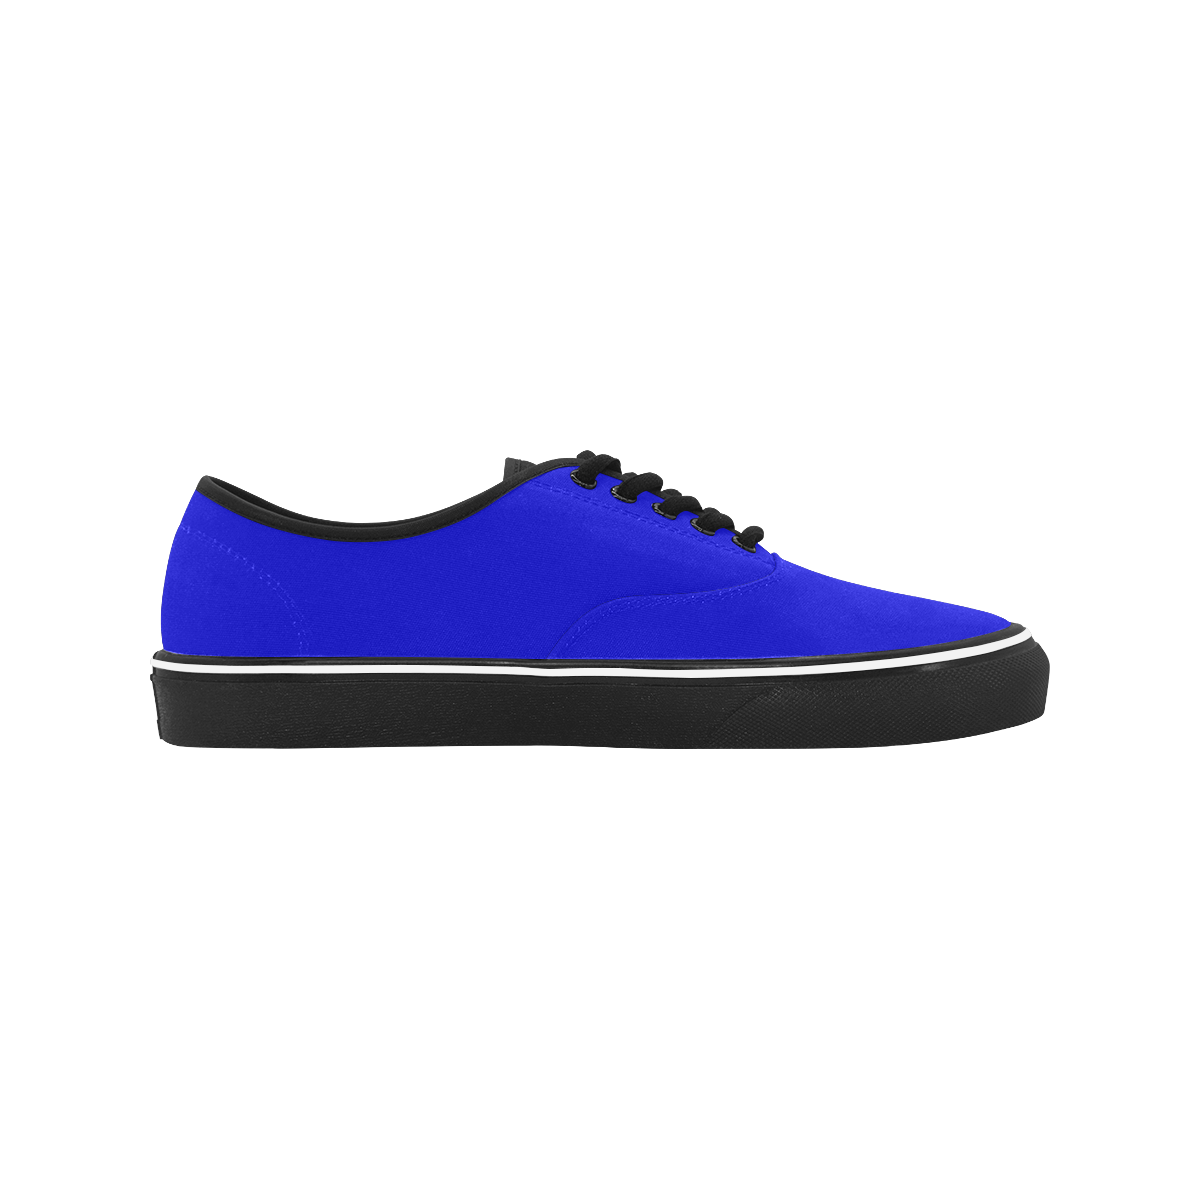 color medium blue Classic Men's Canvas Low Top Shoes (Model E001-4)